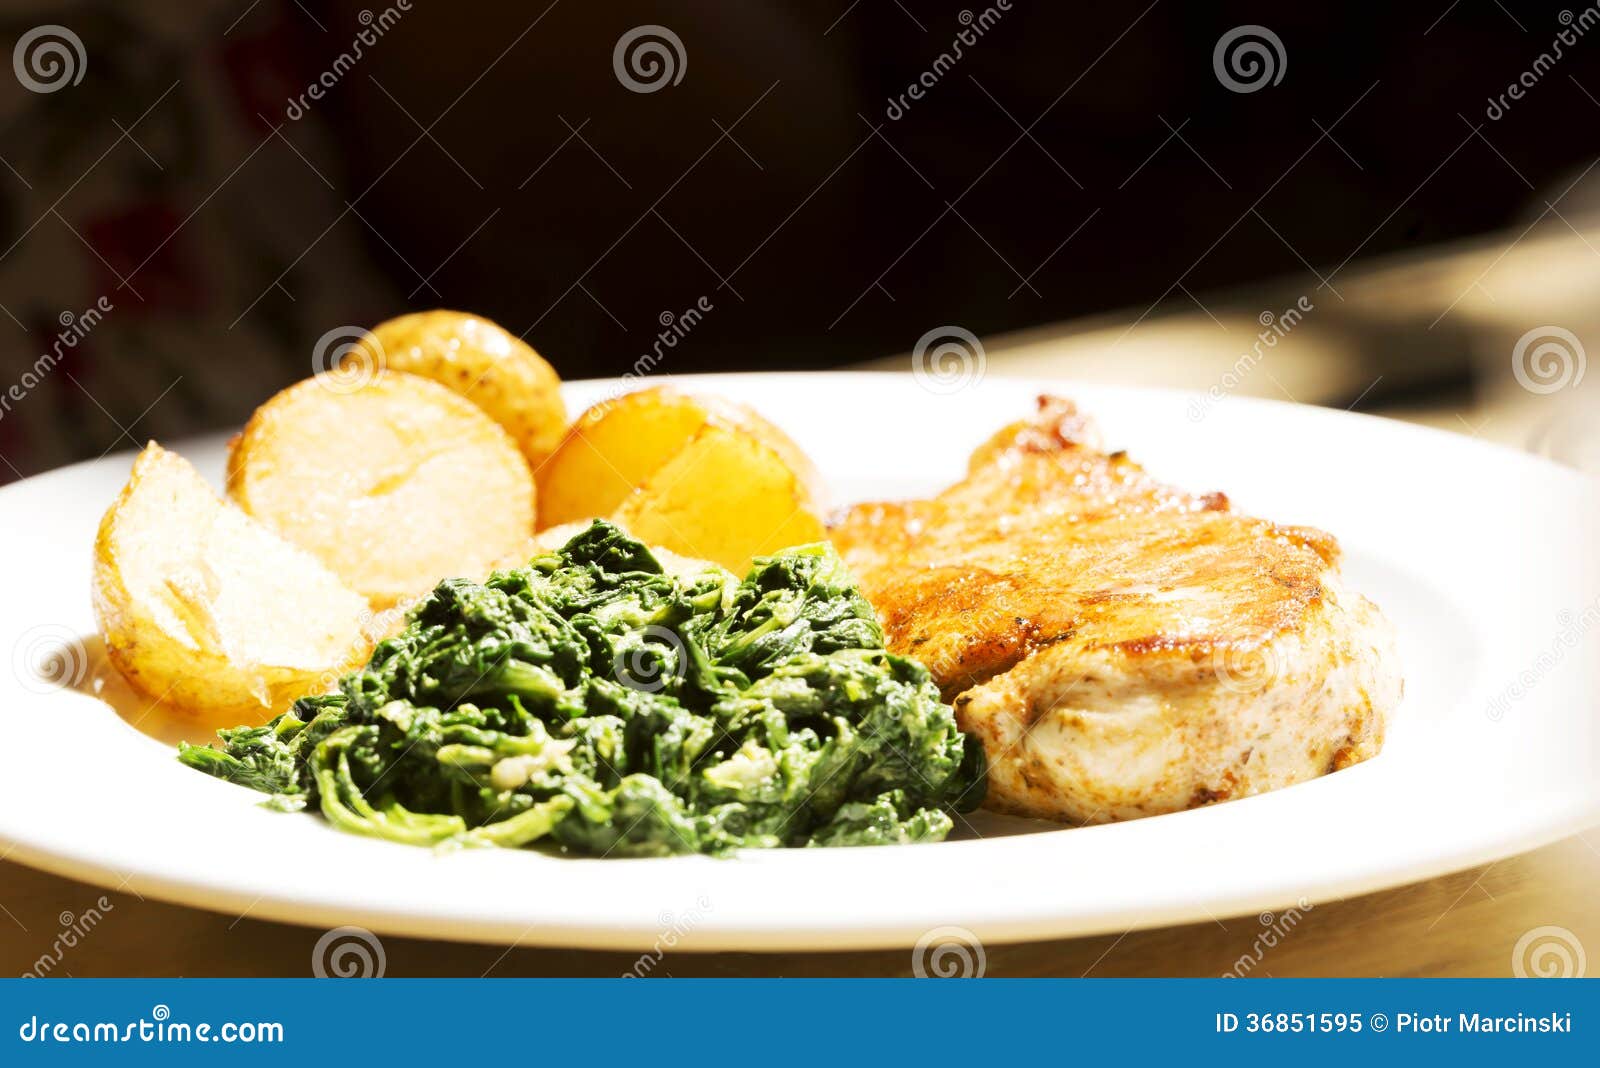 fresh coocked food on a plate.